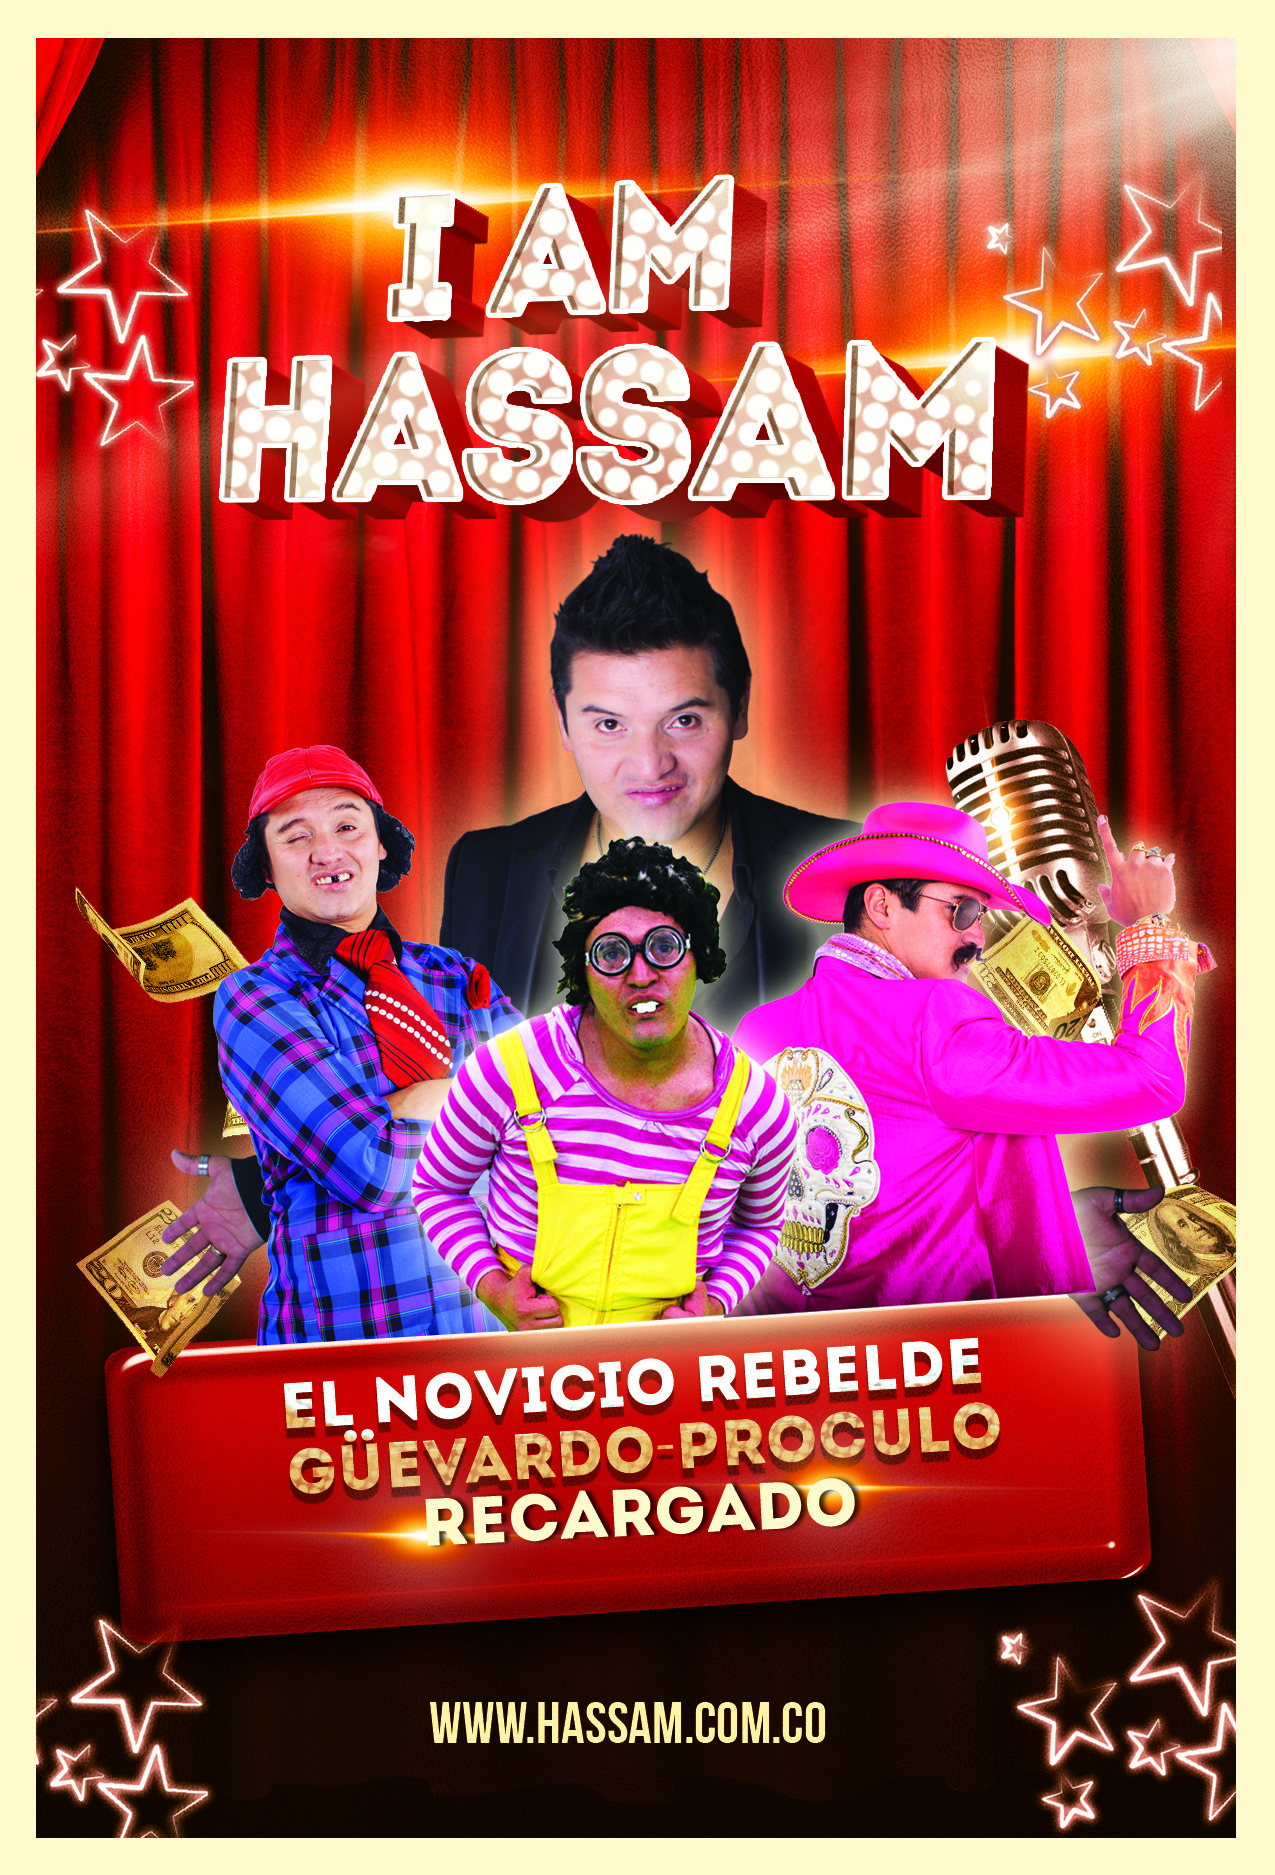 Show “I am Hassam”